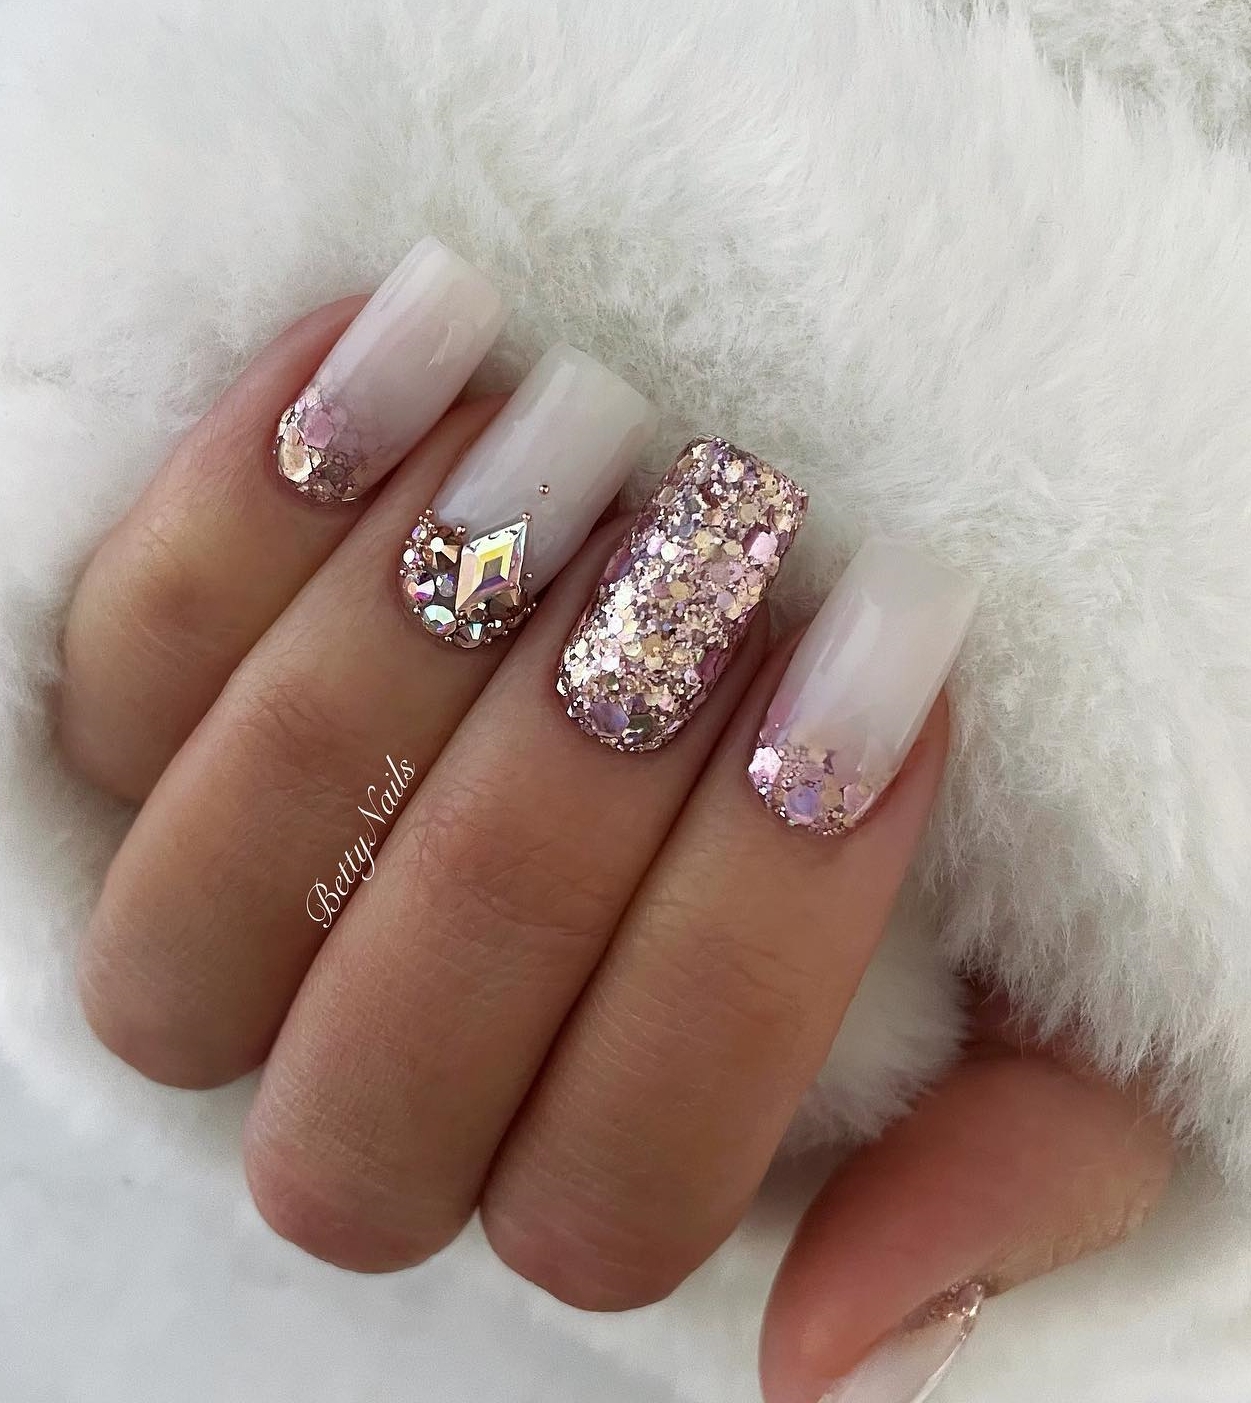 Vierkante witte nagels met gouden roze glitter